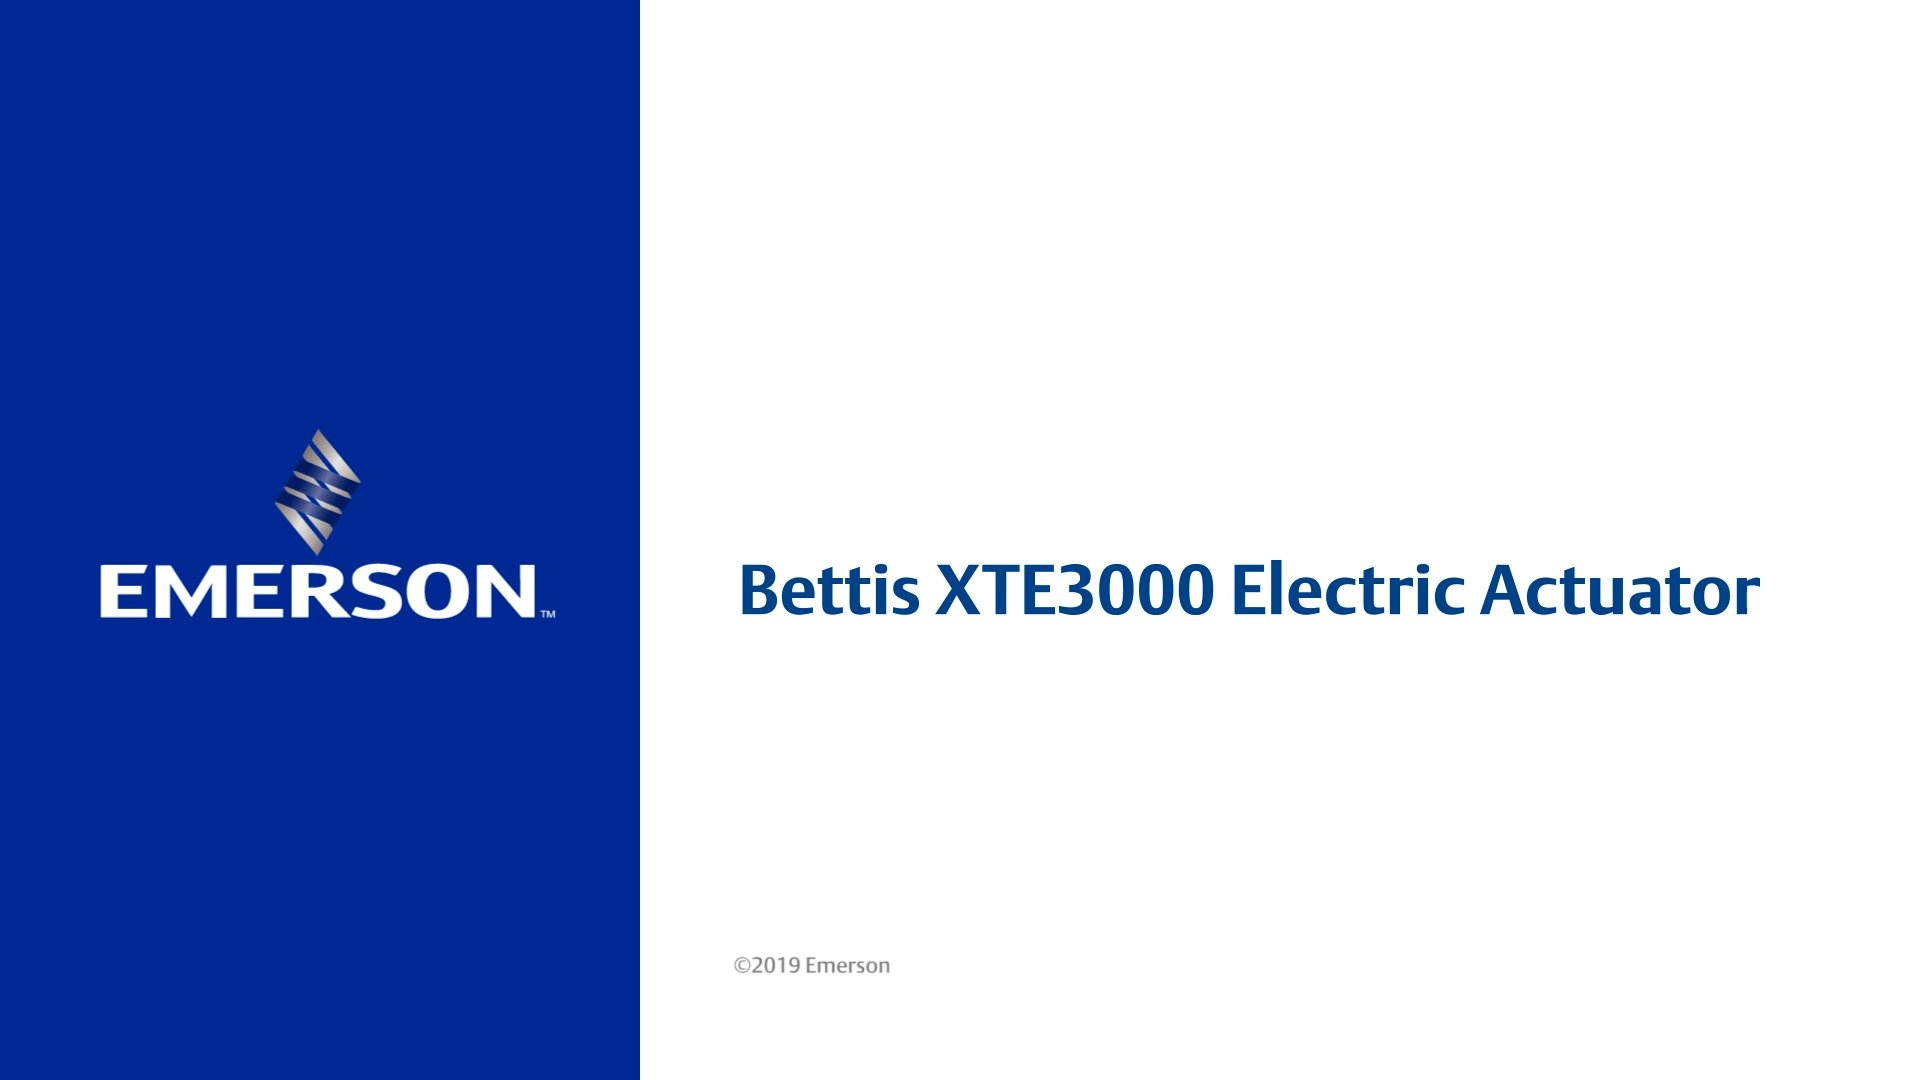 Bettis XTE3000 Electric Actuator - Emerson Impact Partners Deliver!